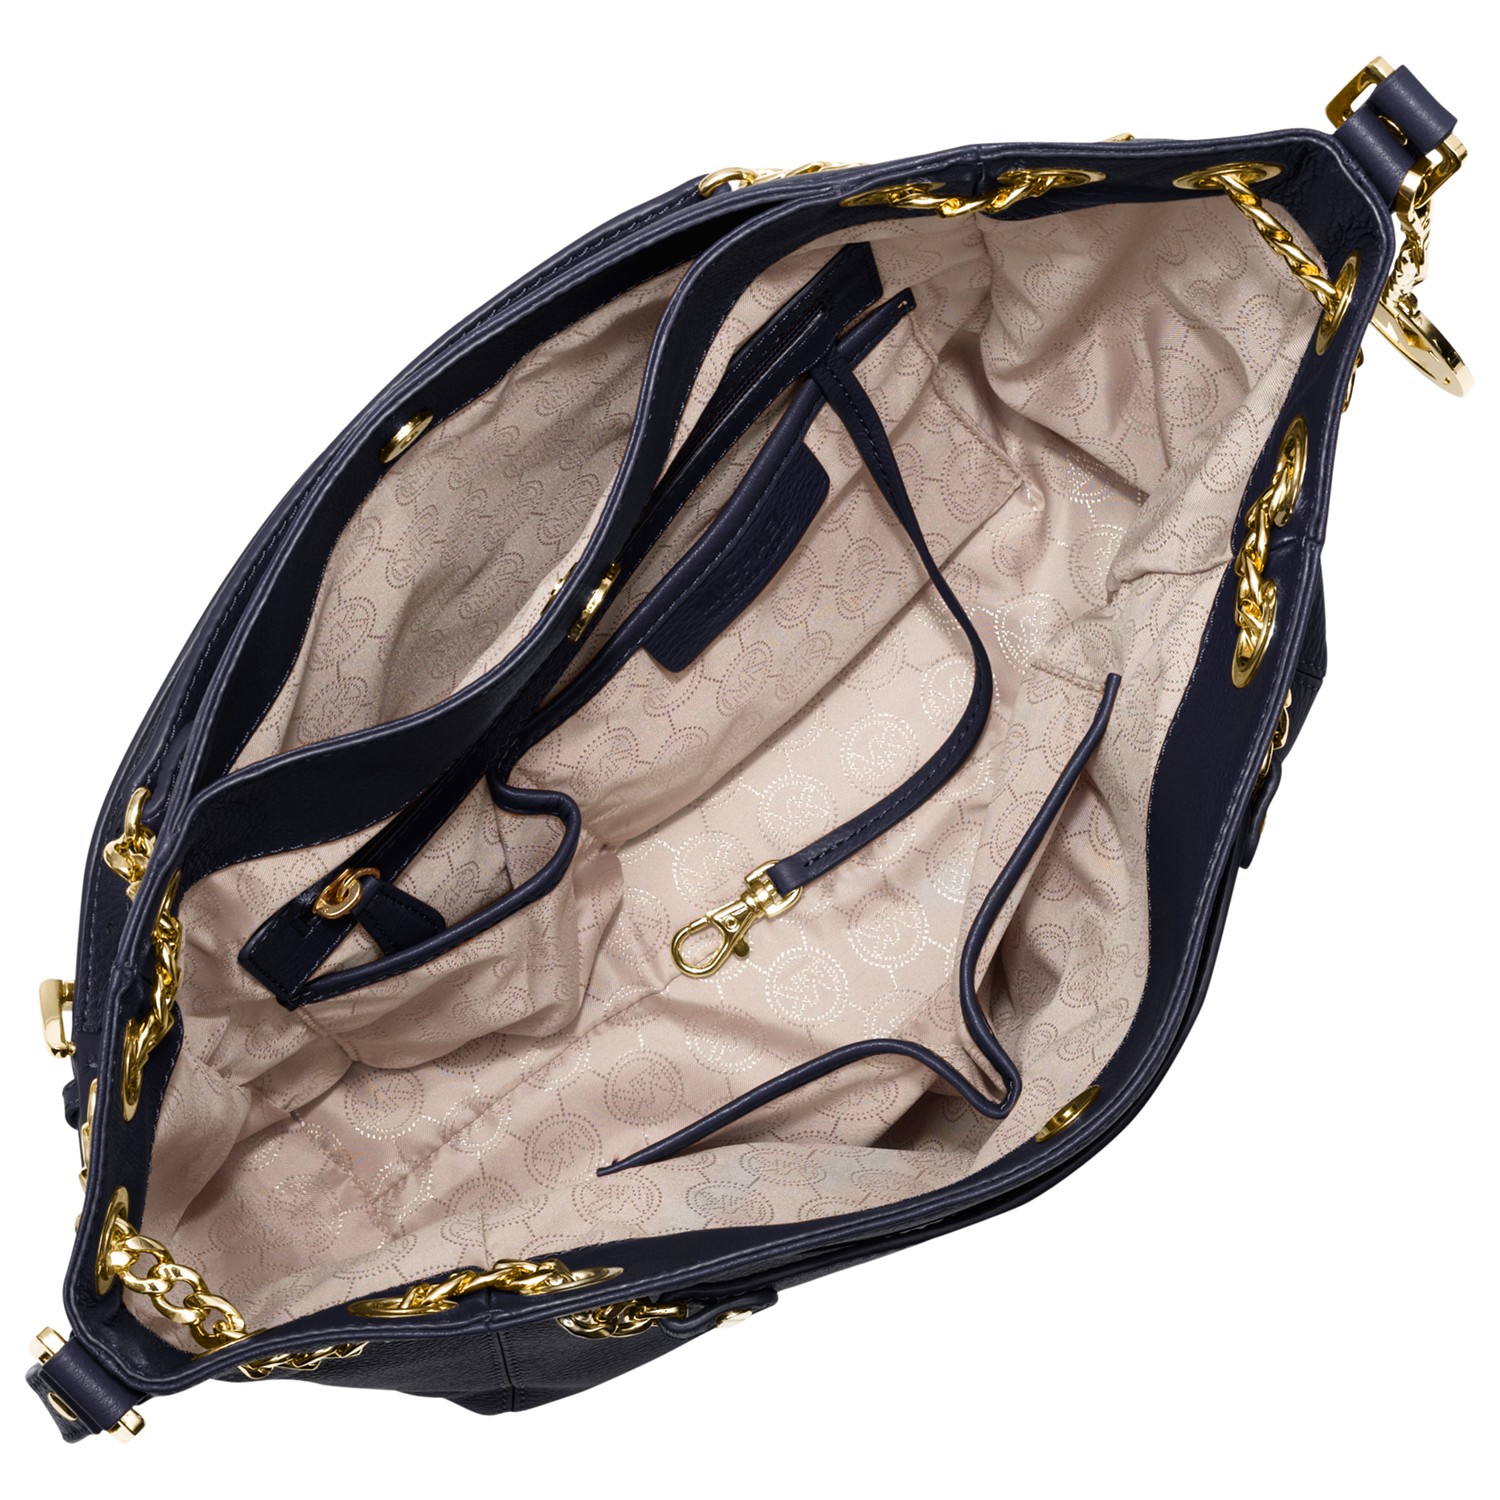 MICHAEL Michael Kors Jet Set Chain Medium Tote Handbag in Navy (Blue) - Lyst